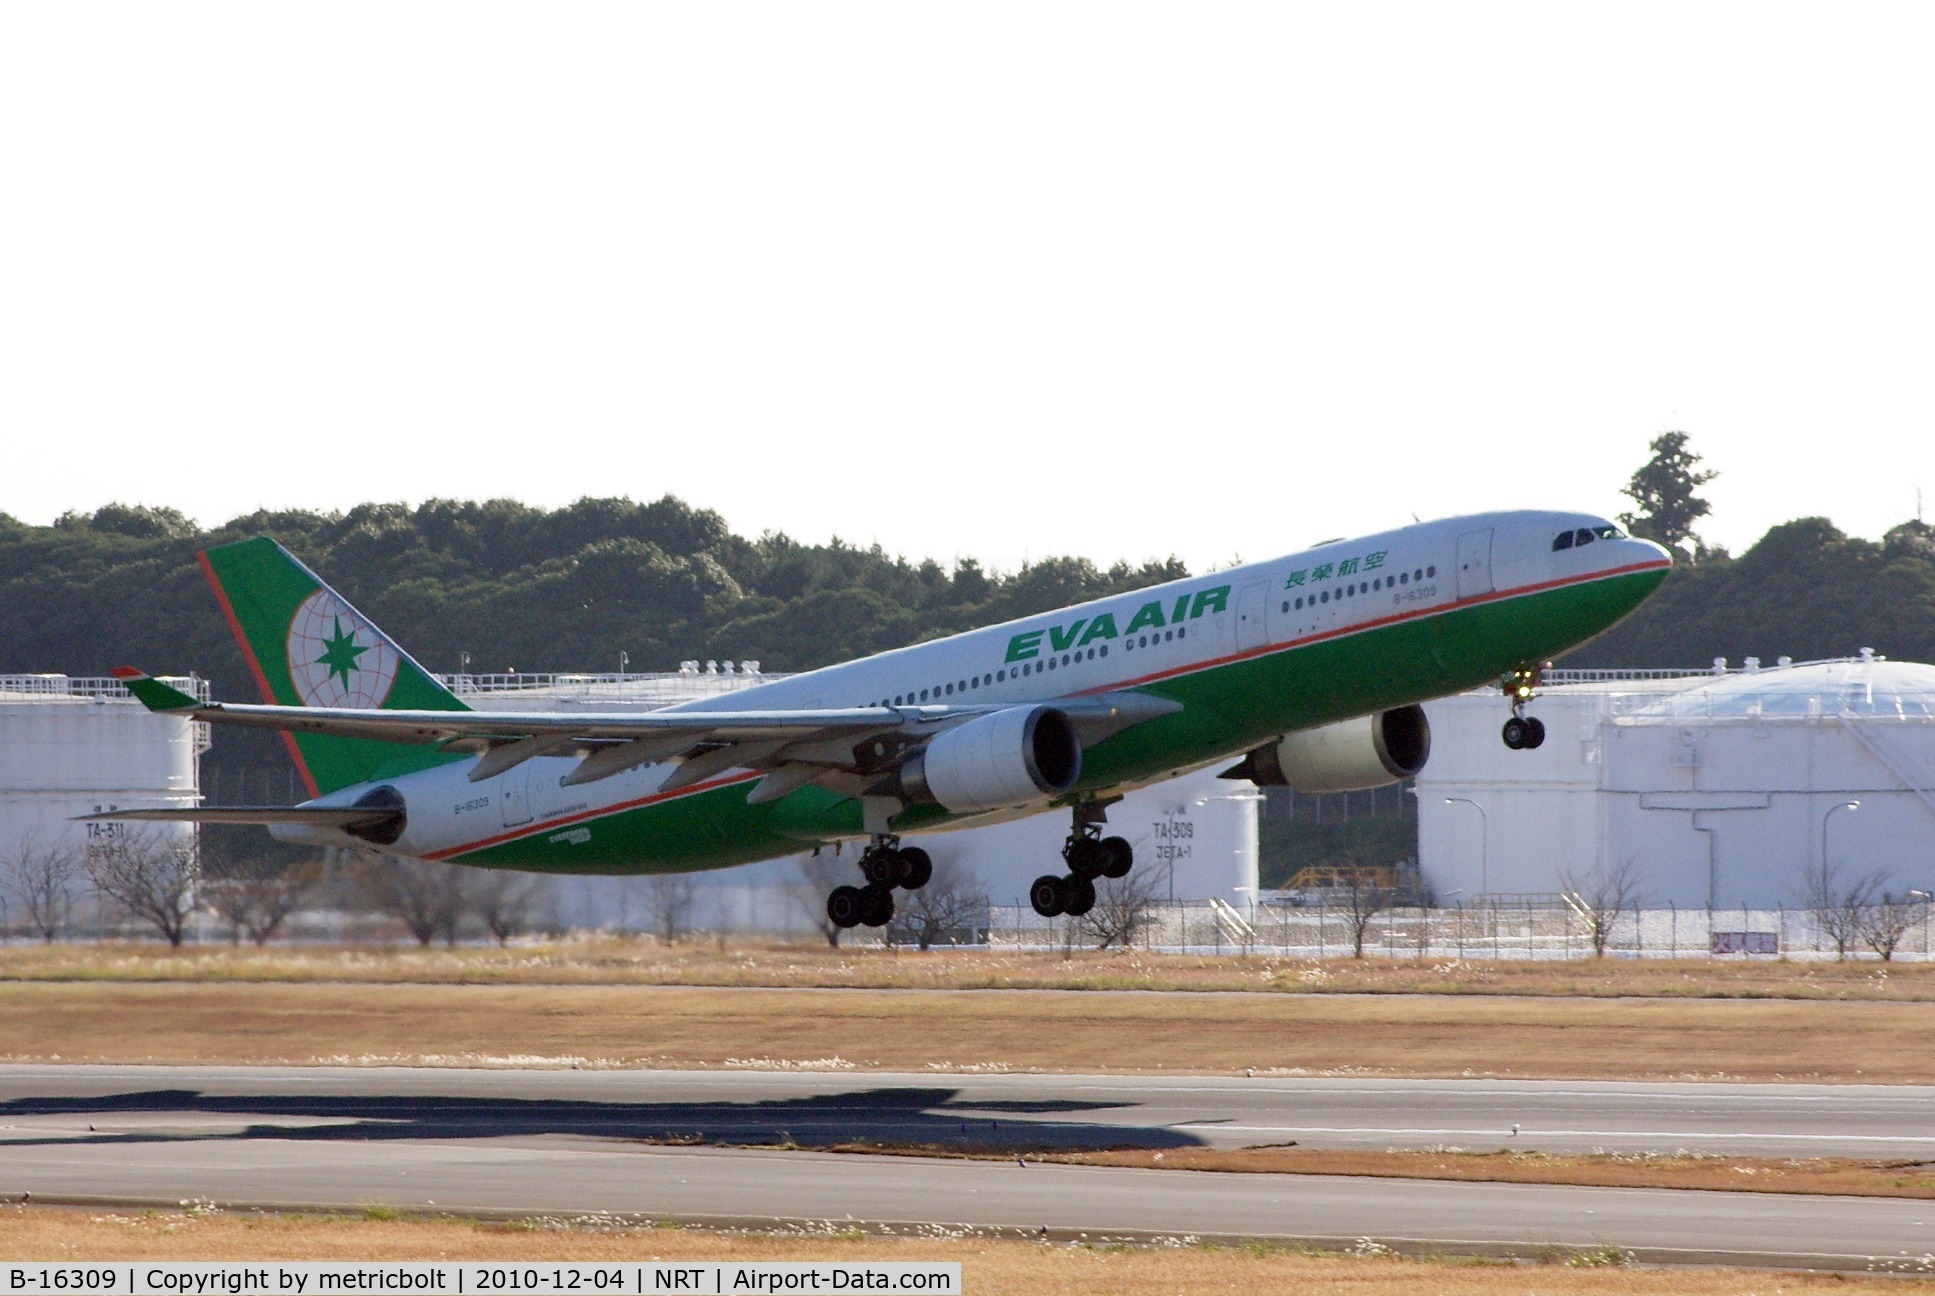 B-16309, 2005 Airbus A330-203 C/N 661, Take off from Narita